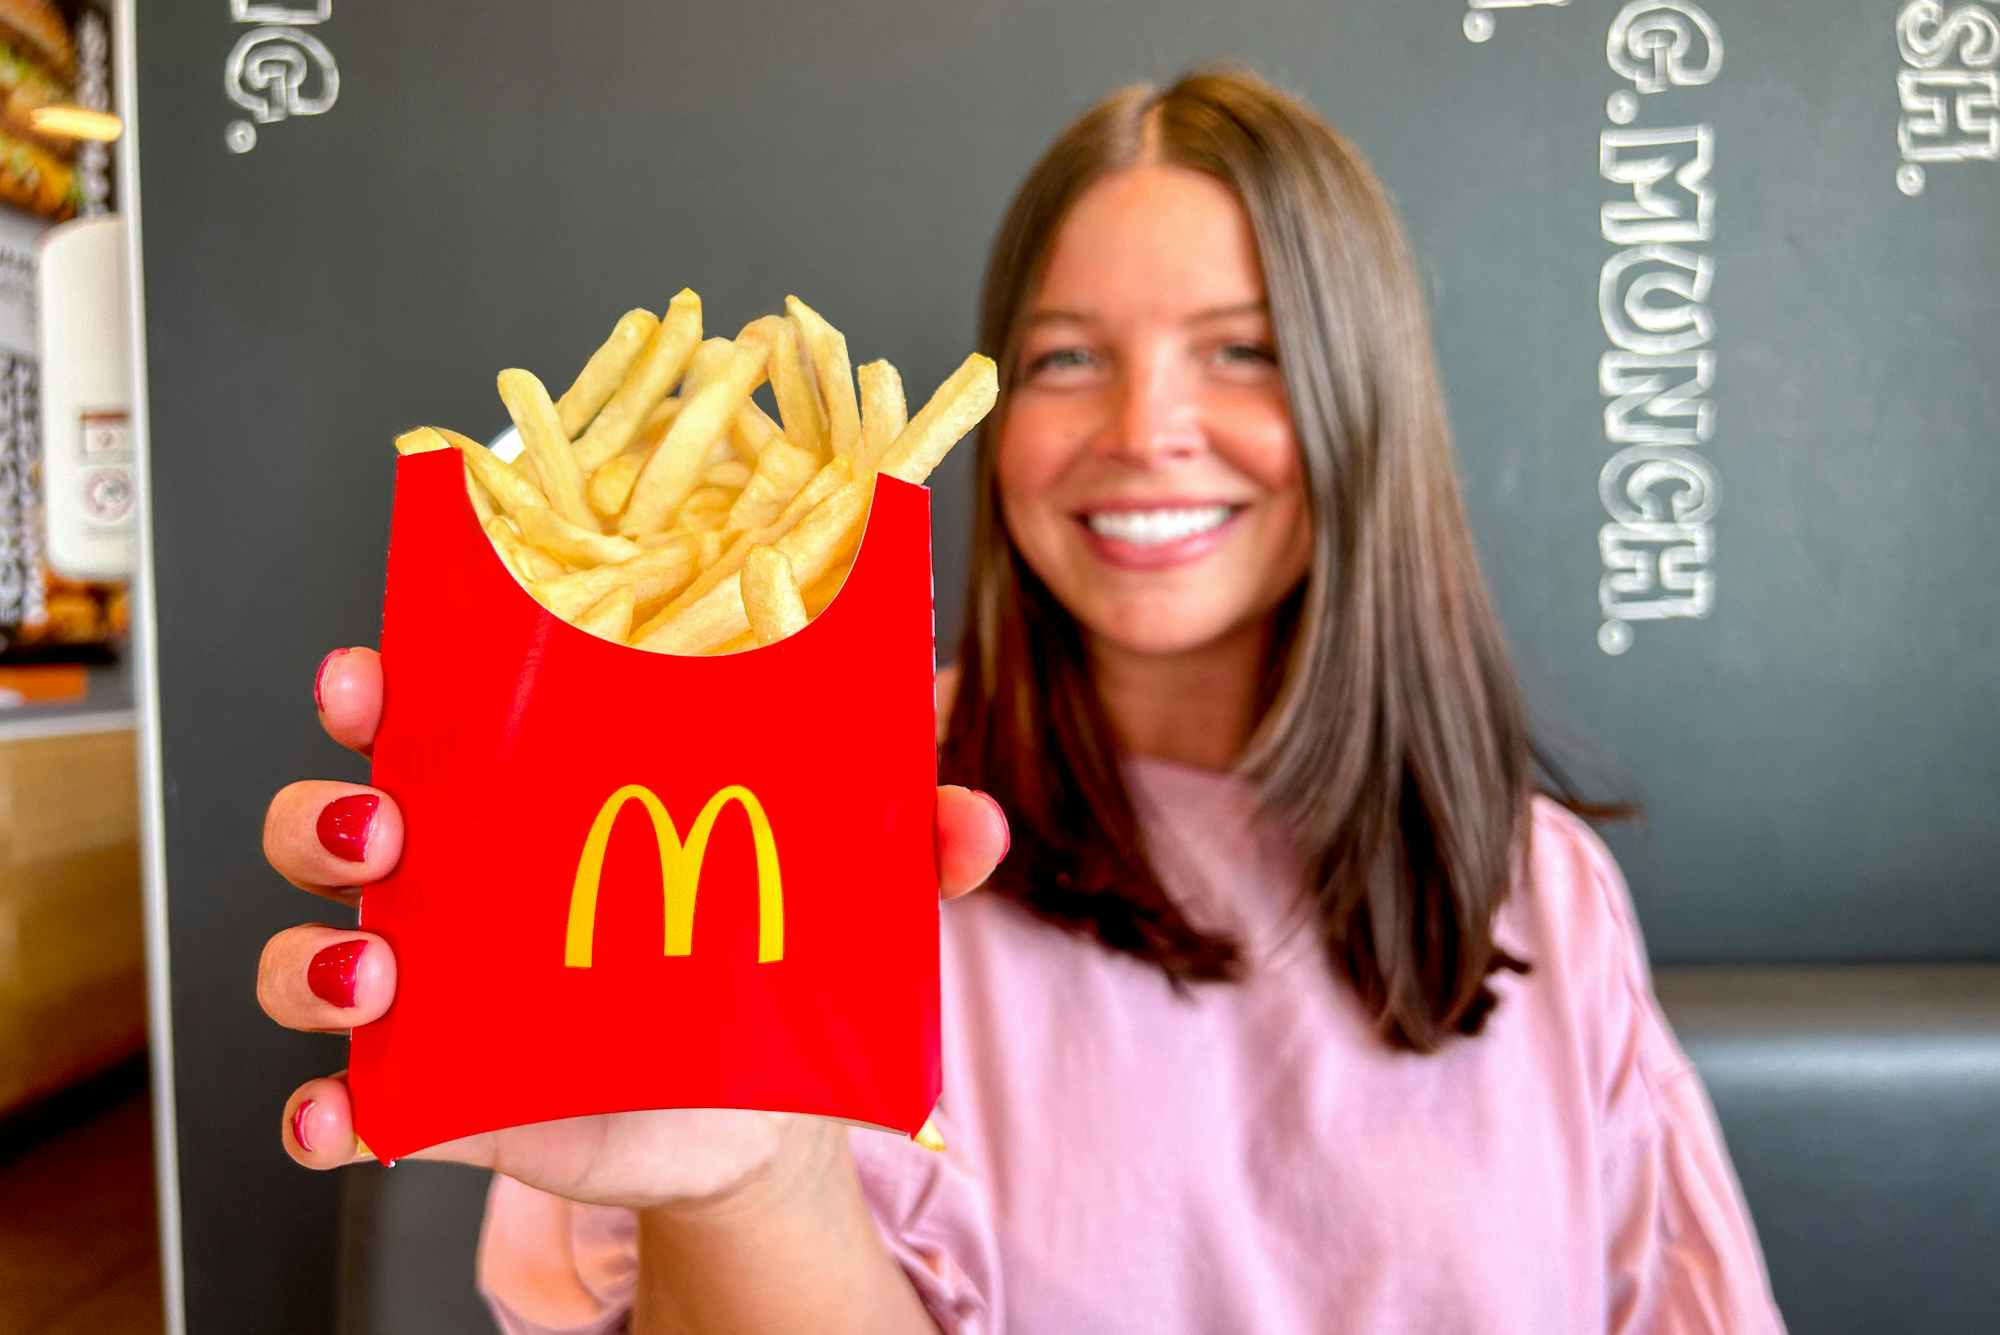 mcdonalds-free-french-fries-model-kcl.jpg